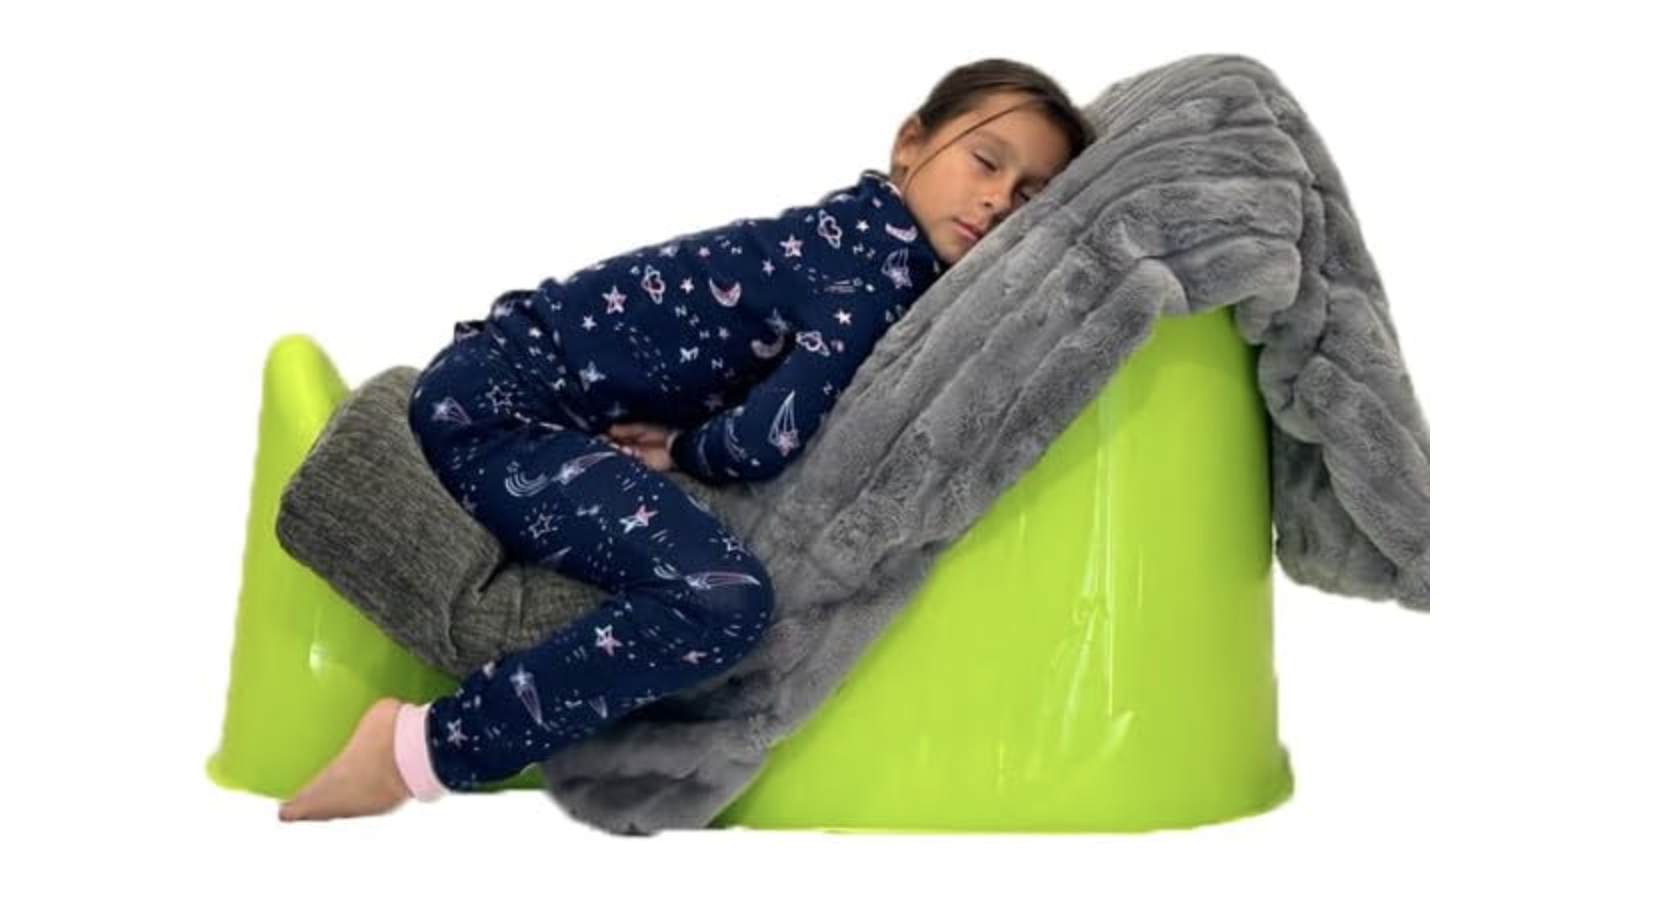 tum & bum inclined sleeper, inclined sleeper for kids